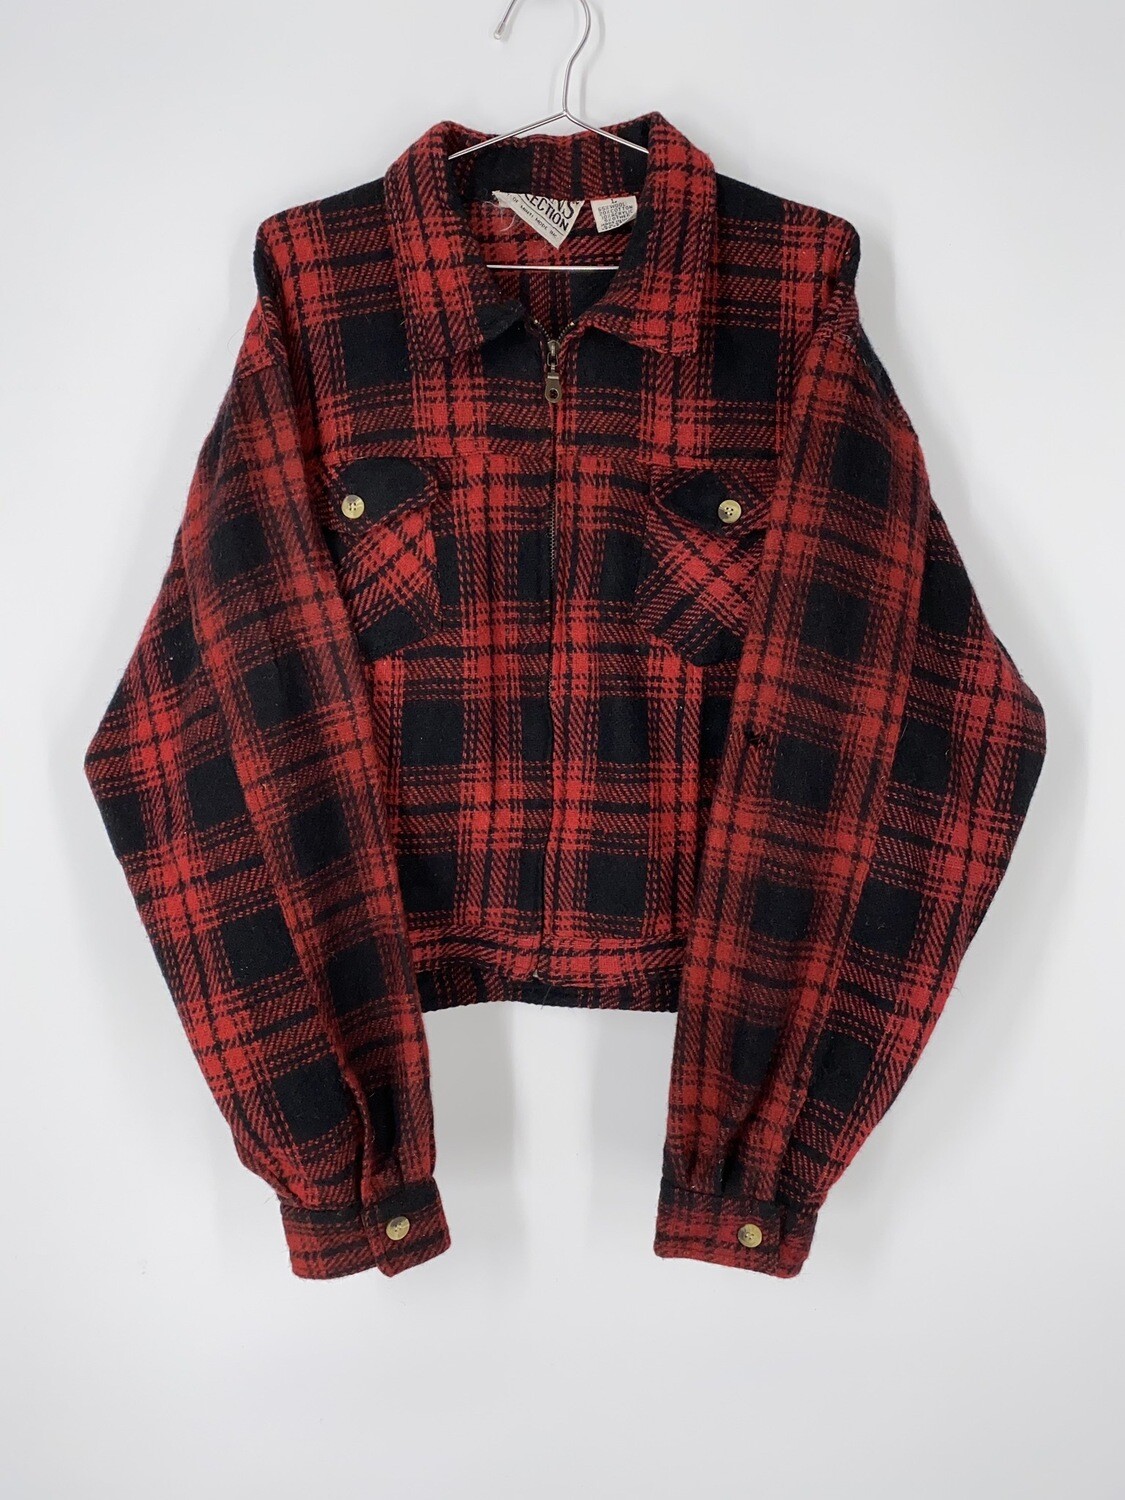 Karans Kollection zip Up Flannel Jacket Size L